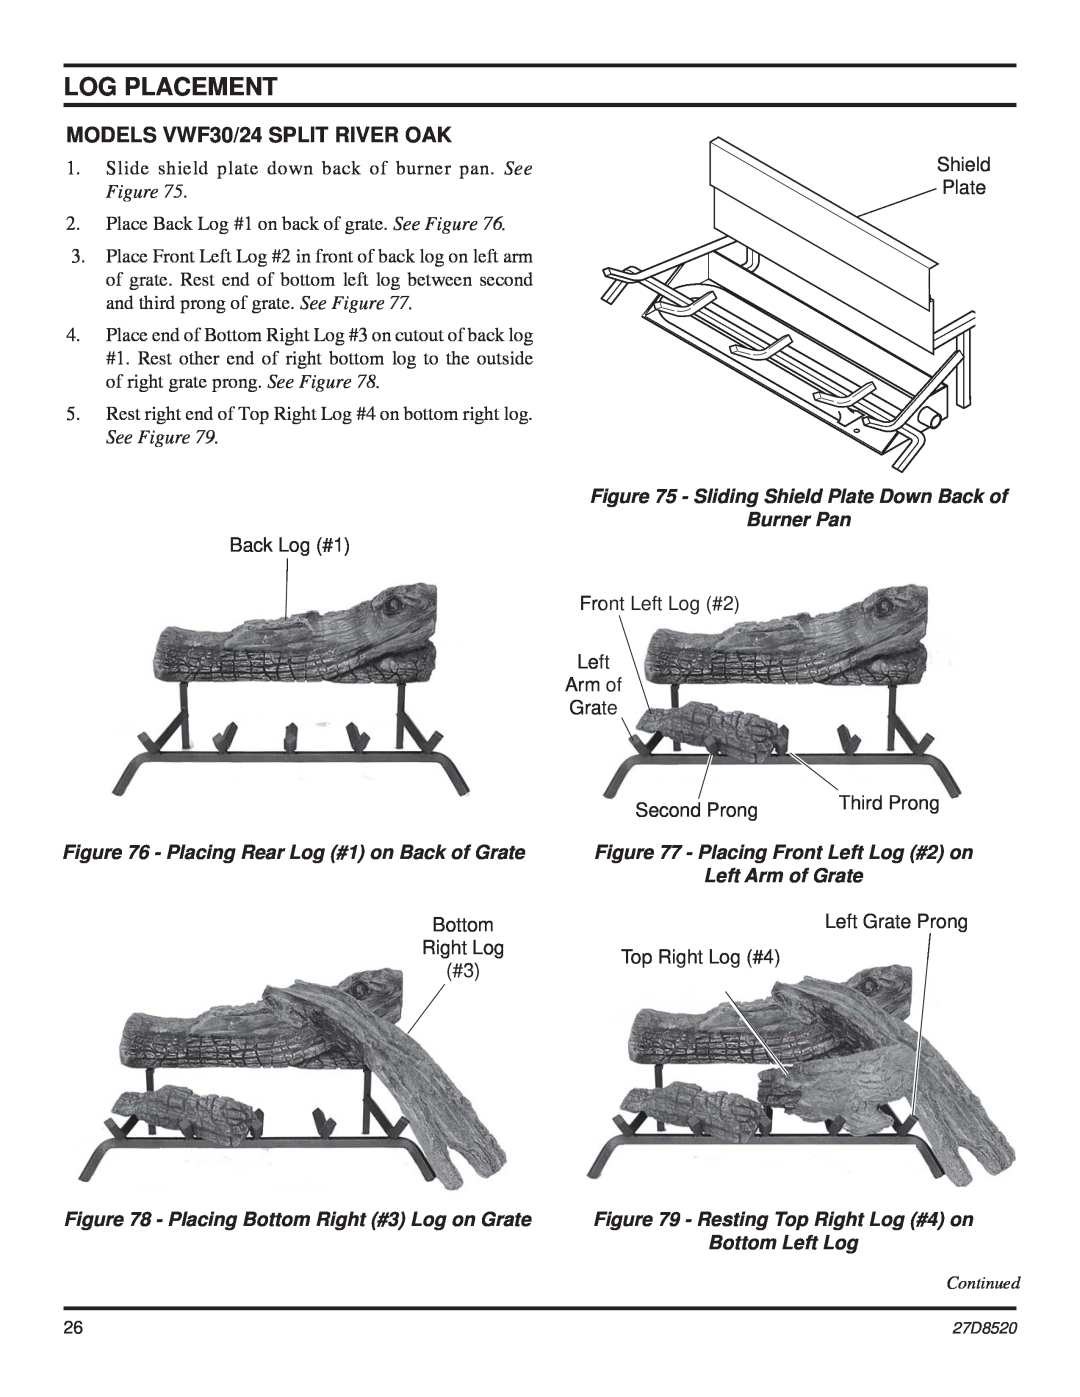 Monessen Hearth VWF18 manual MODELS VWF30/24 SPLIT RIVER OAK, Log Placement, Shield Plate, Back Log #1, Bottom Right Log #3 